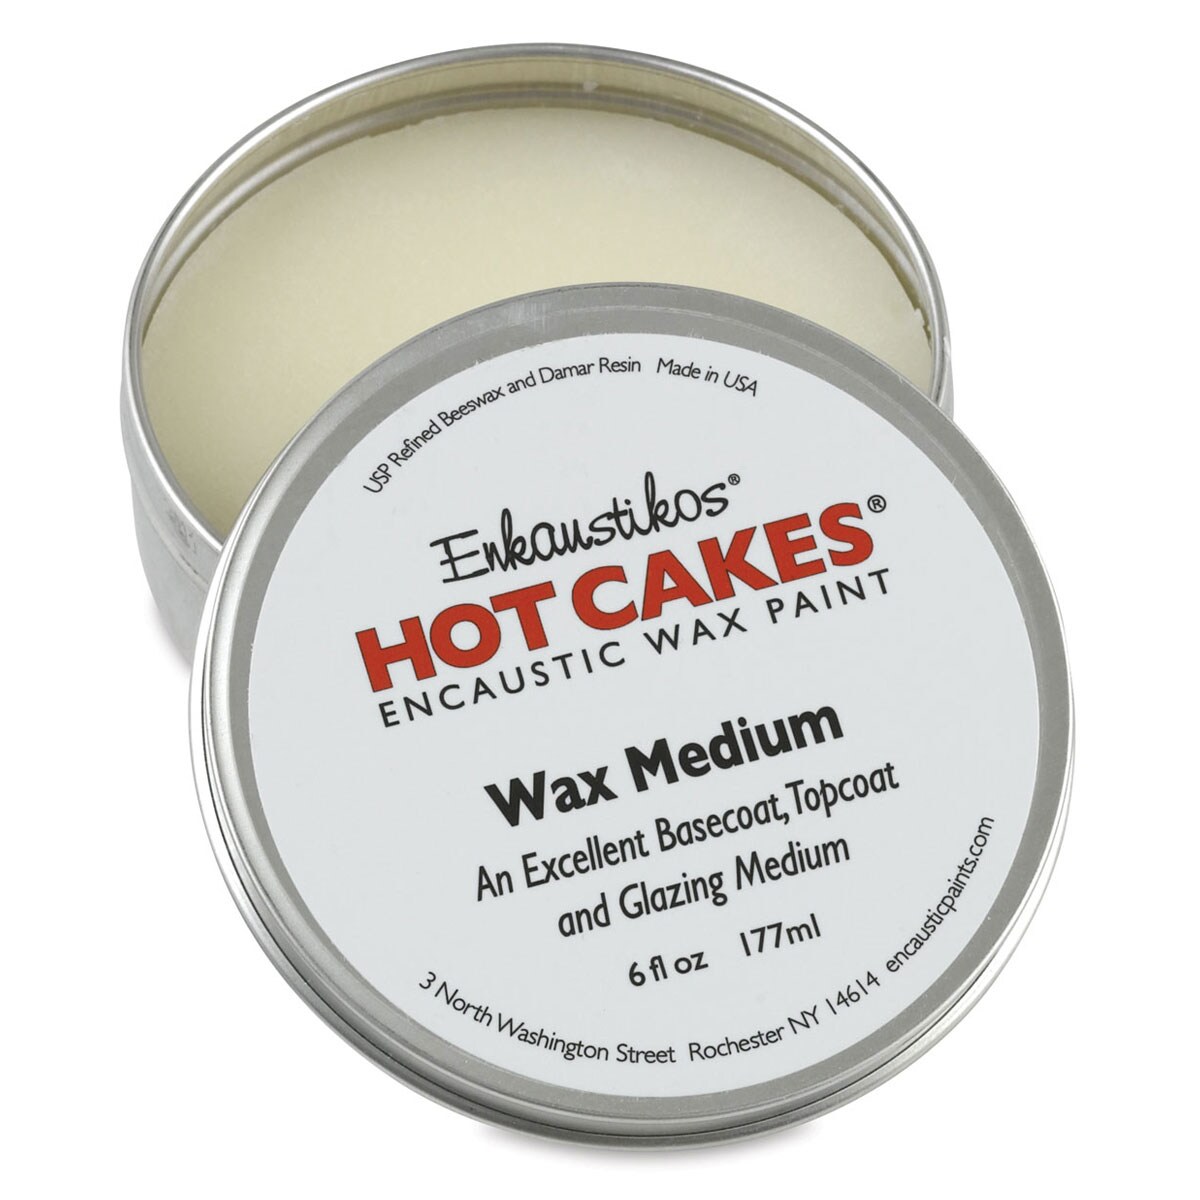 Enkaustickos Wax Medium - 6 oz tin